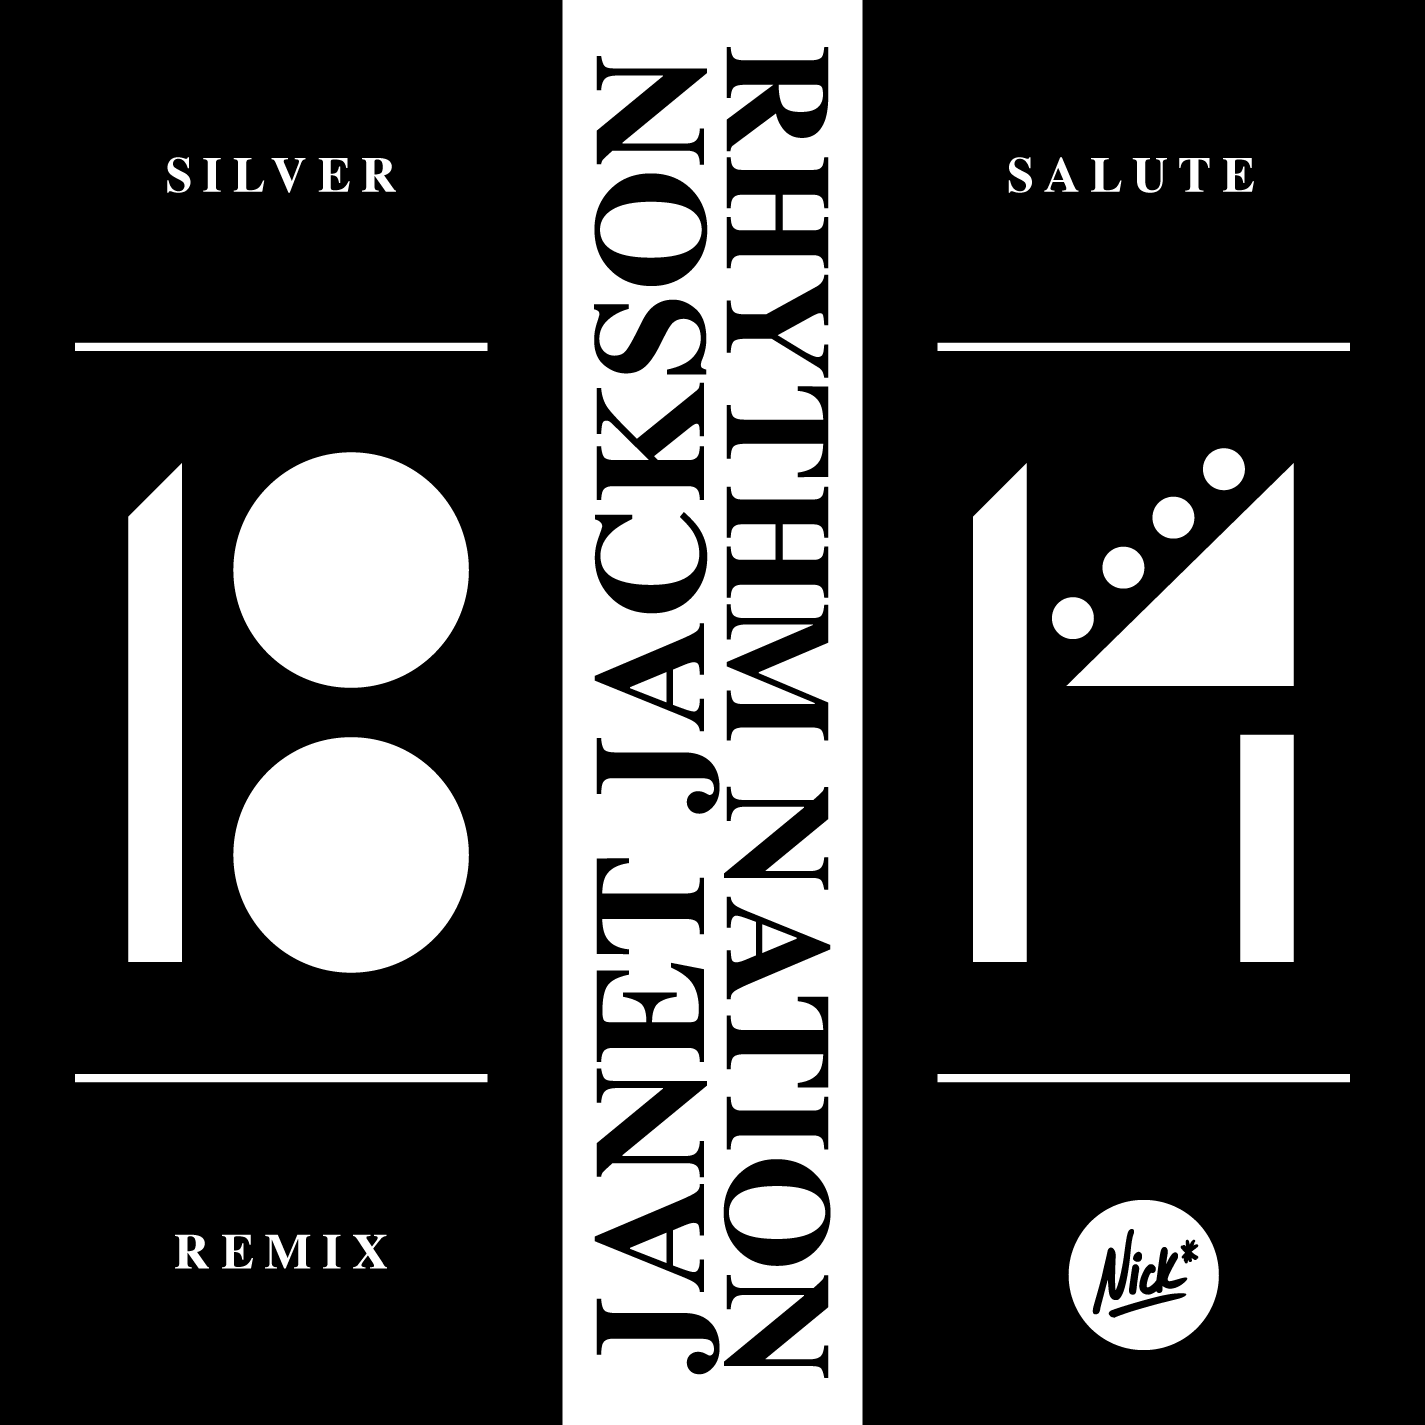 Janet Jackson - Rhythm Nation Nick* Silver Salute Remix